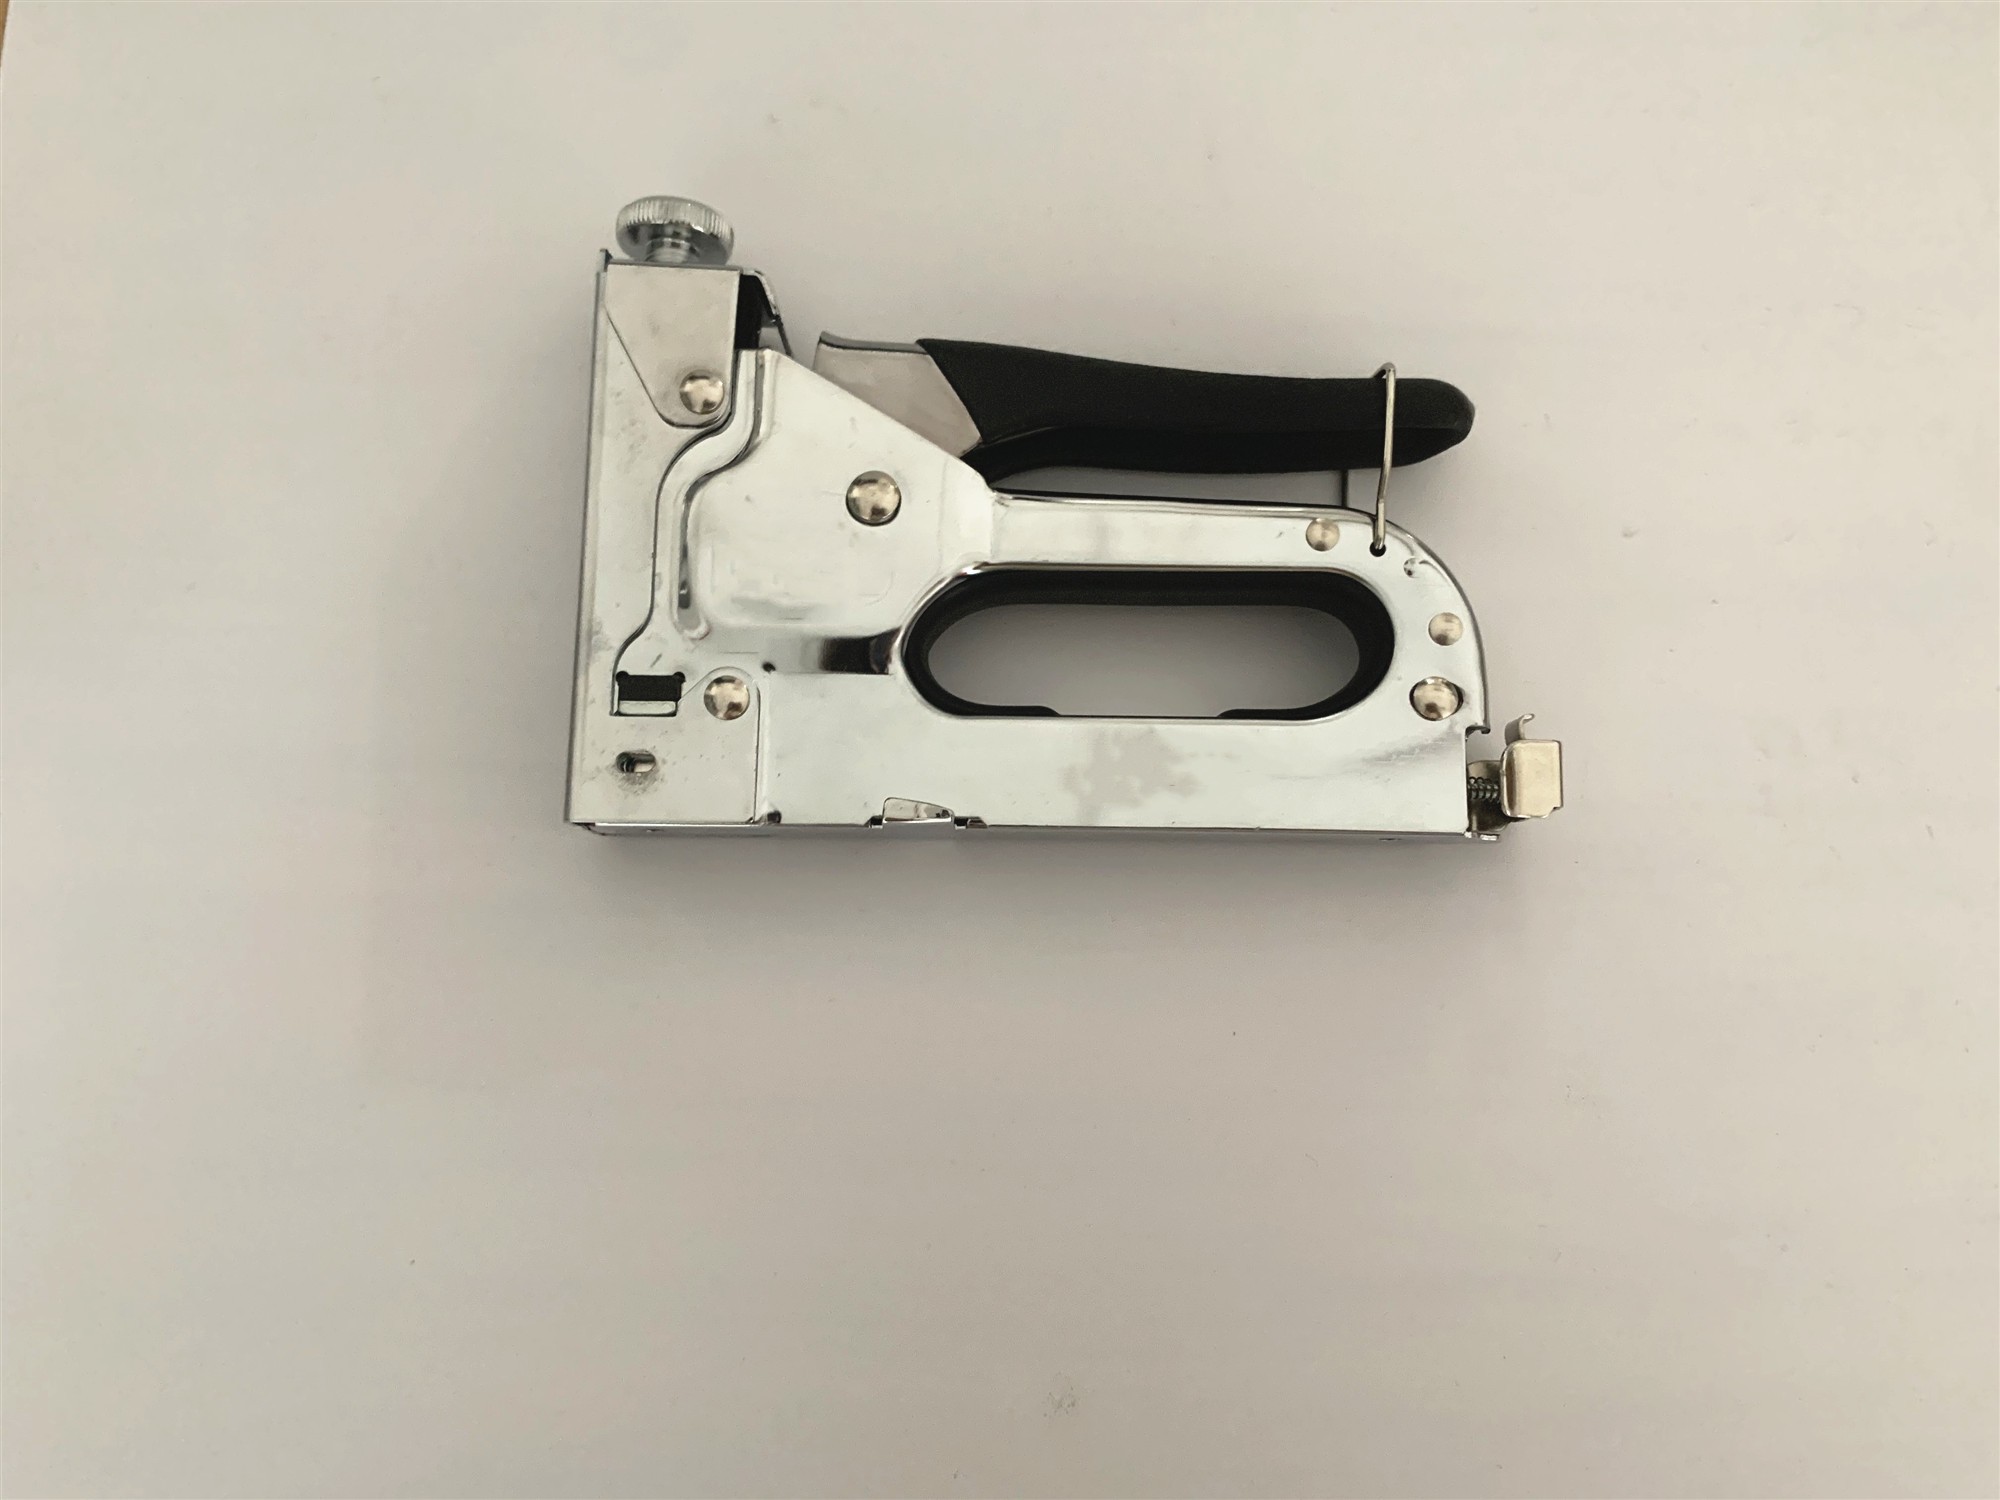 New arrived 10J  U612 F15 staples manual nail gun  industry staples for upholstery